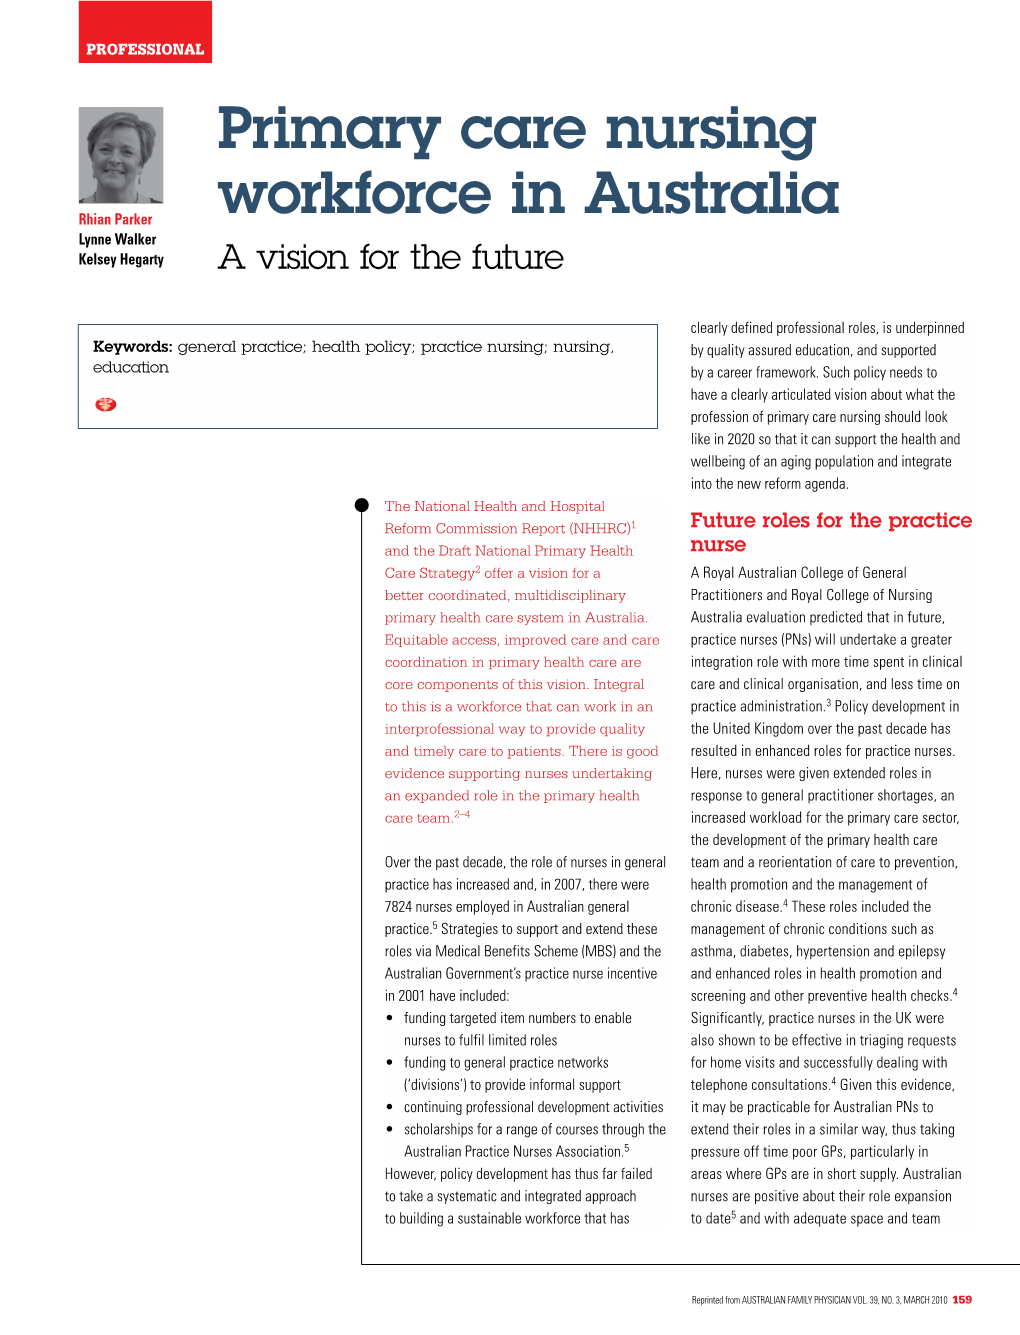 Primary Care Nursing Workforce in Australia